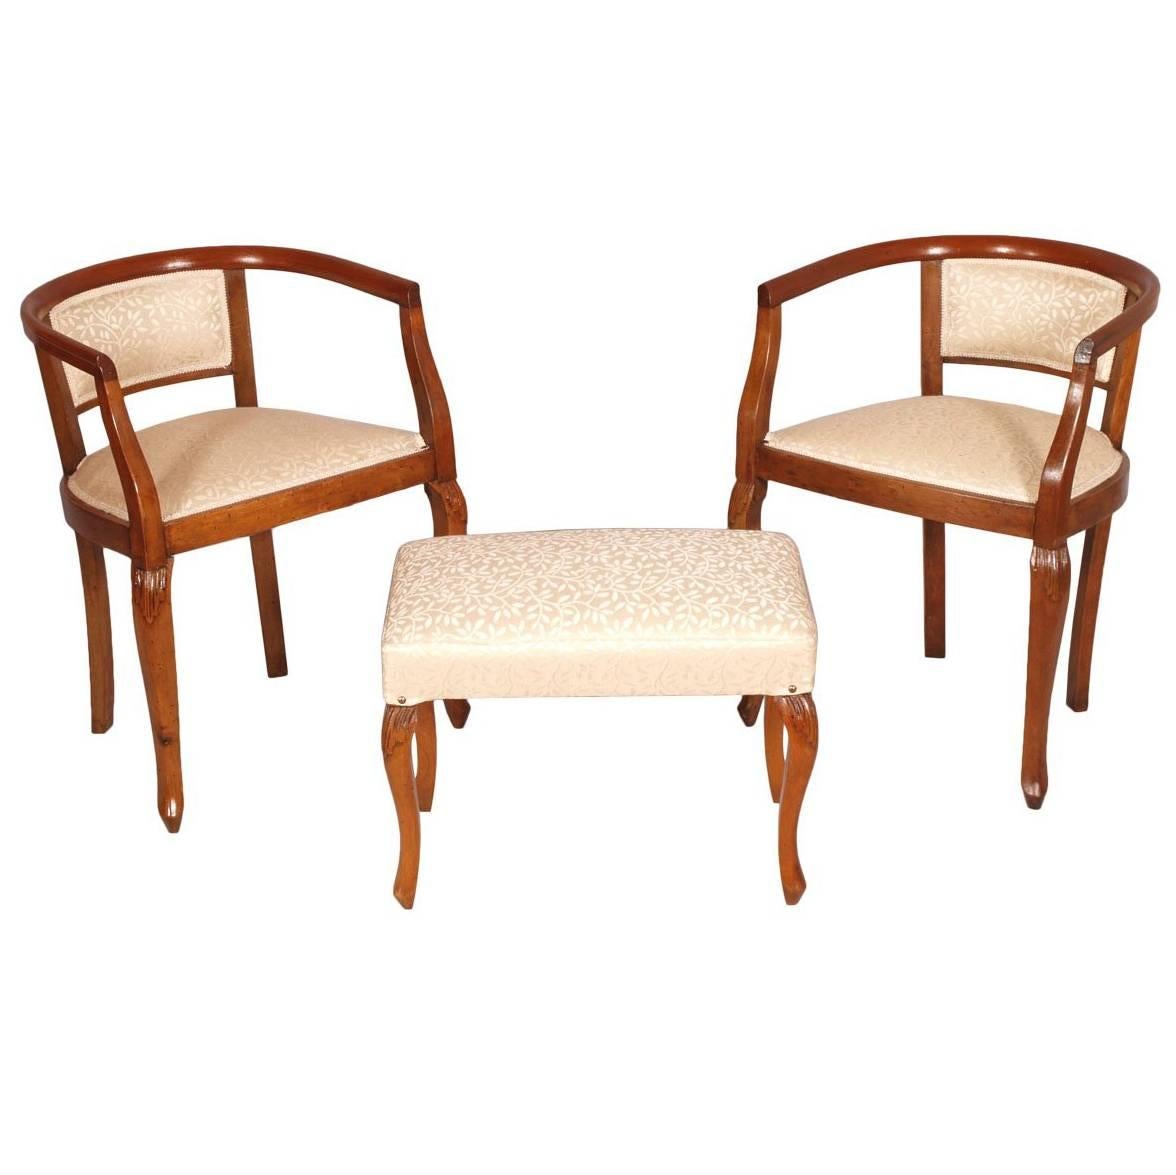 Early 20th Century Italian Set Bedroom Chairs Art Nouveau, Walnut Hand-Cared